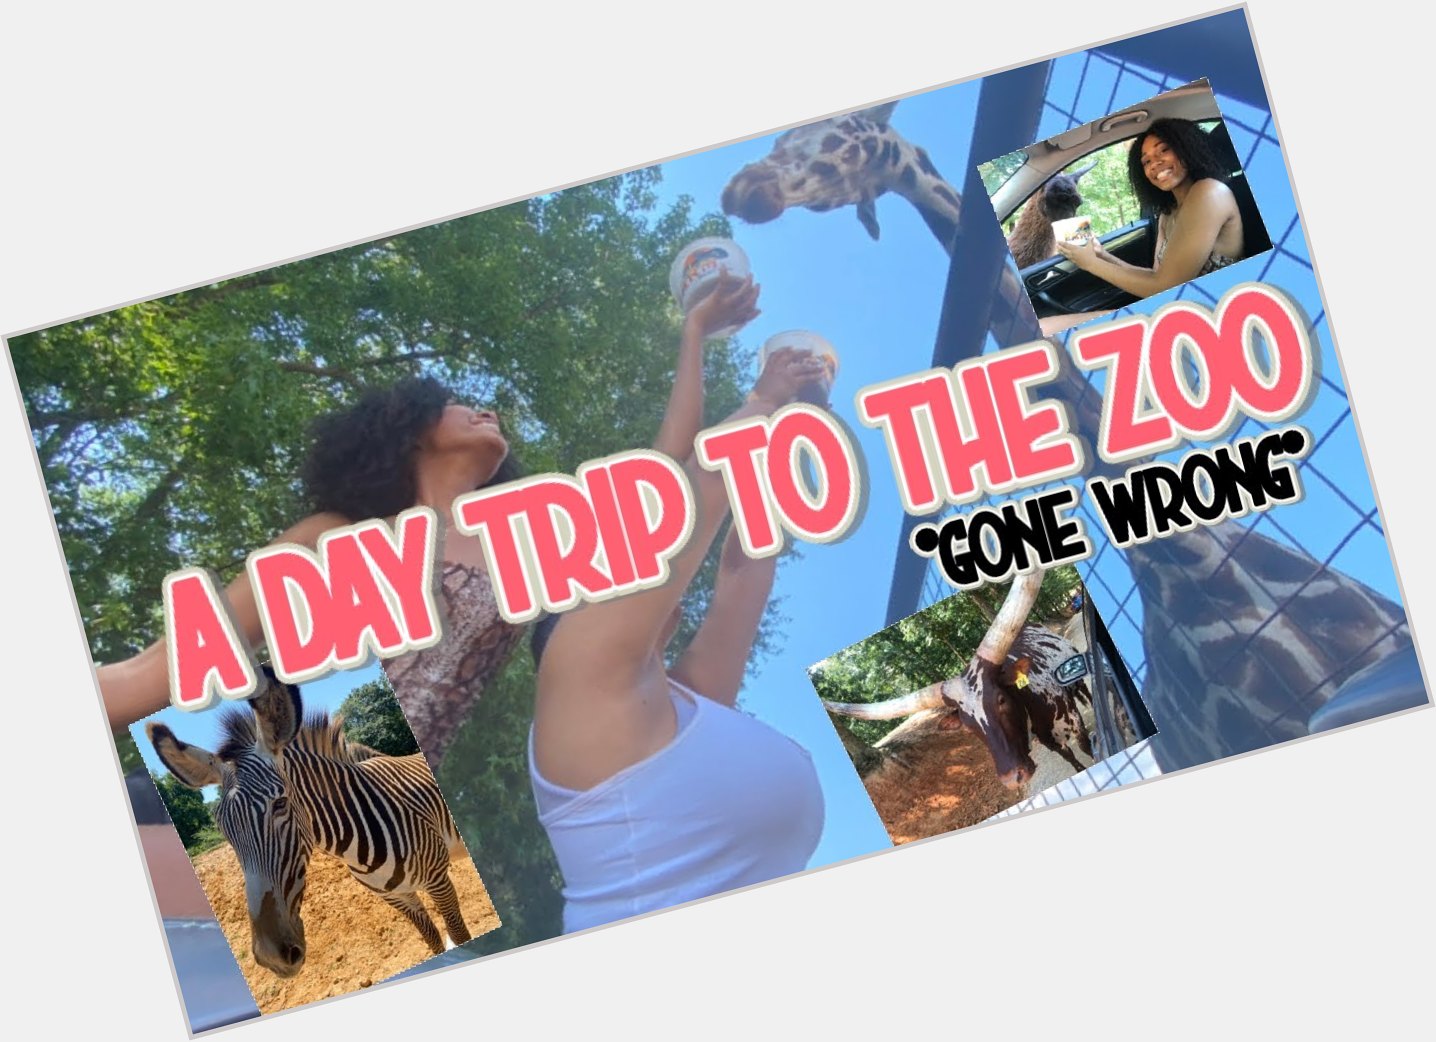 A Day At The Zoo shirtless bikini